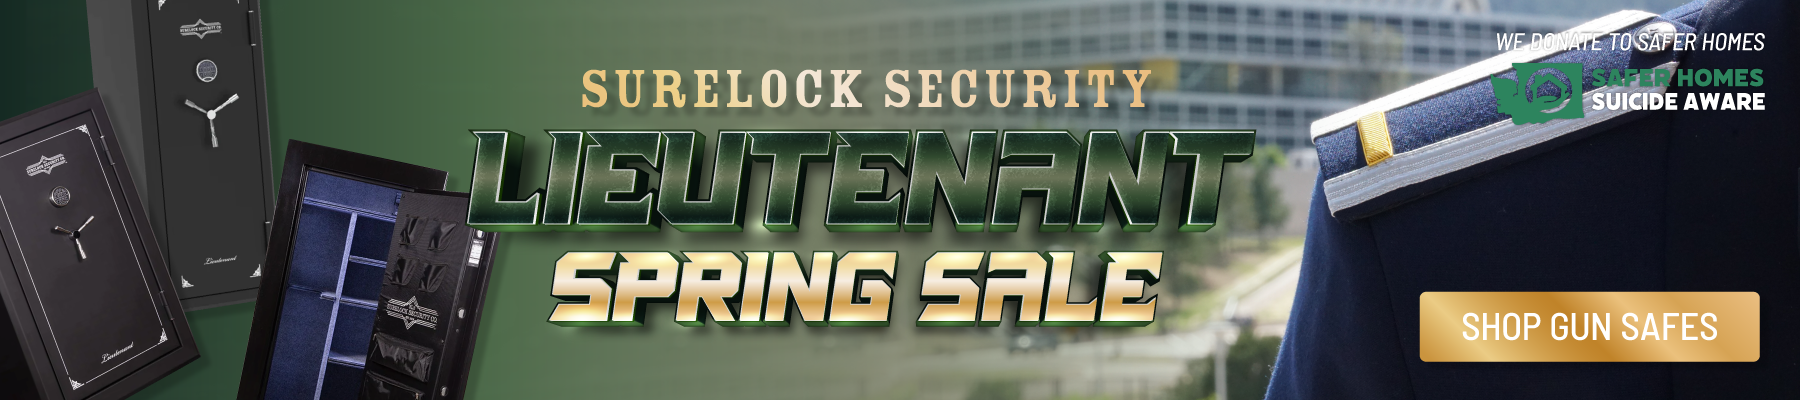 Surelock Lieutenant Spring Gun Safe Sale